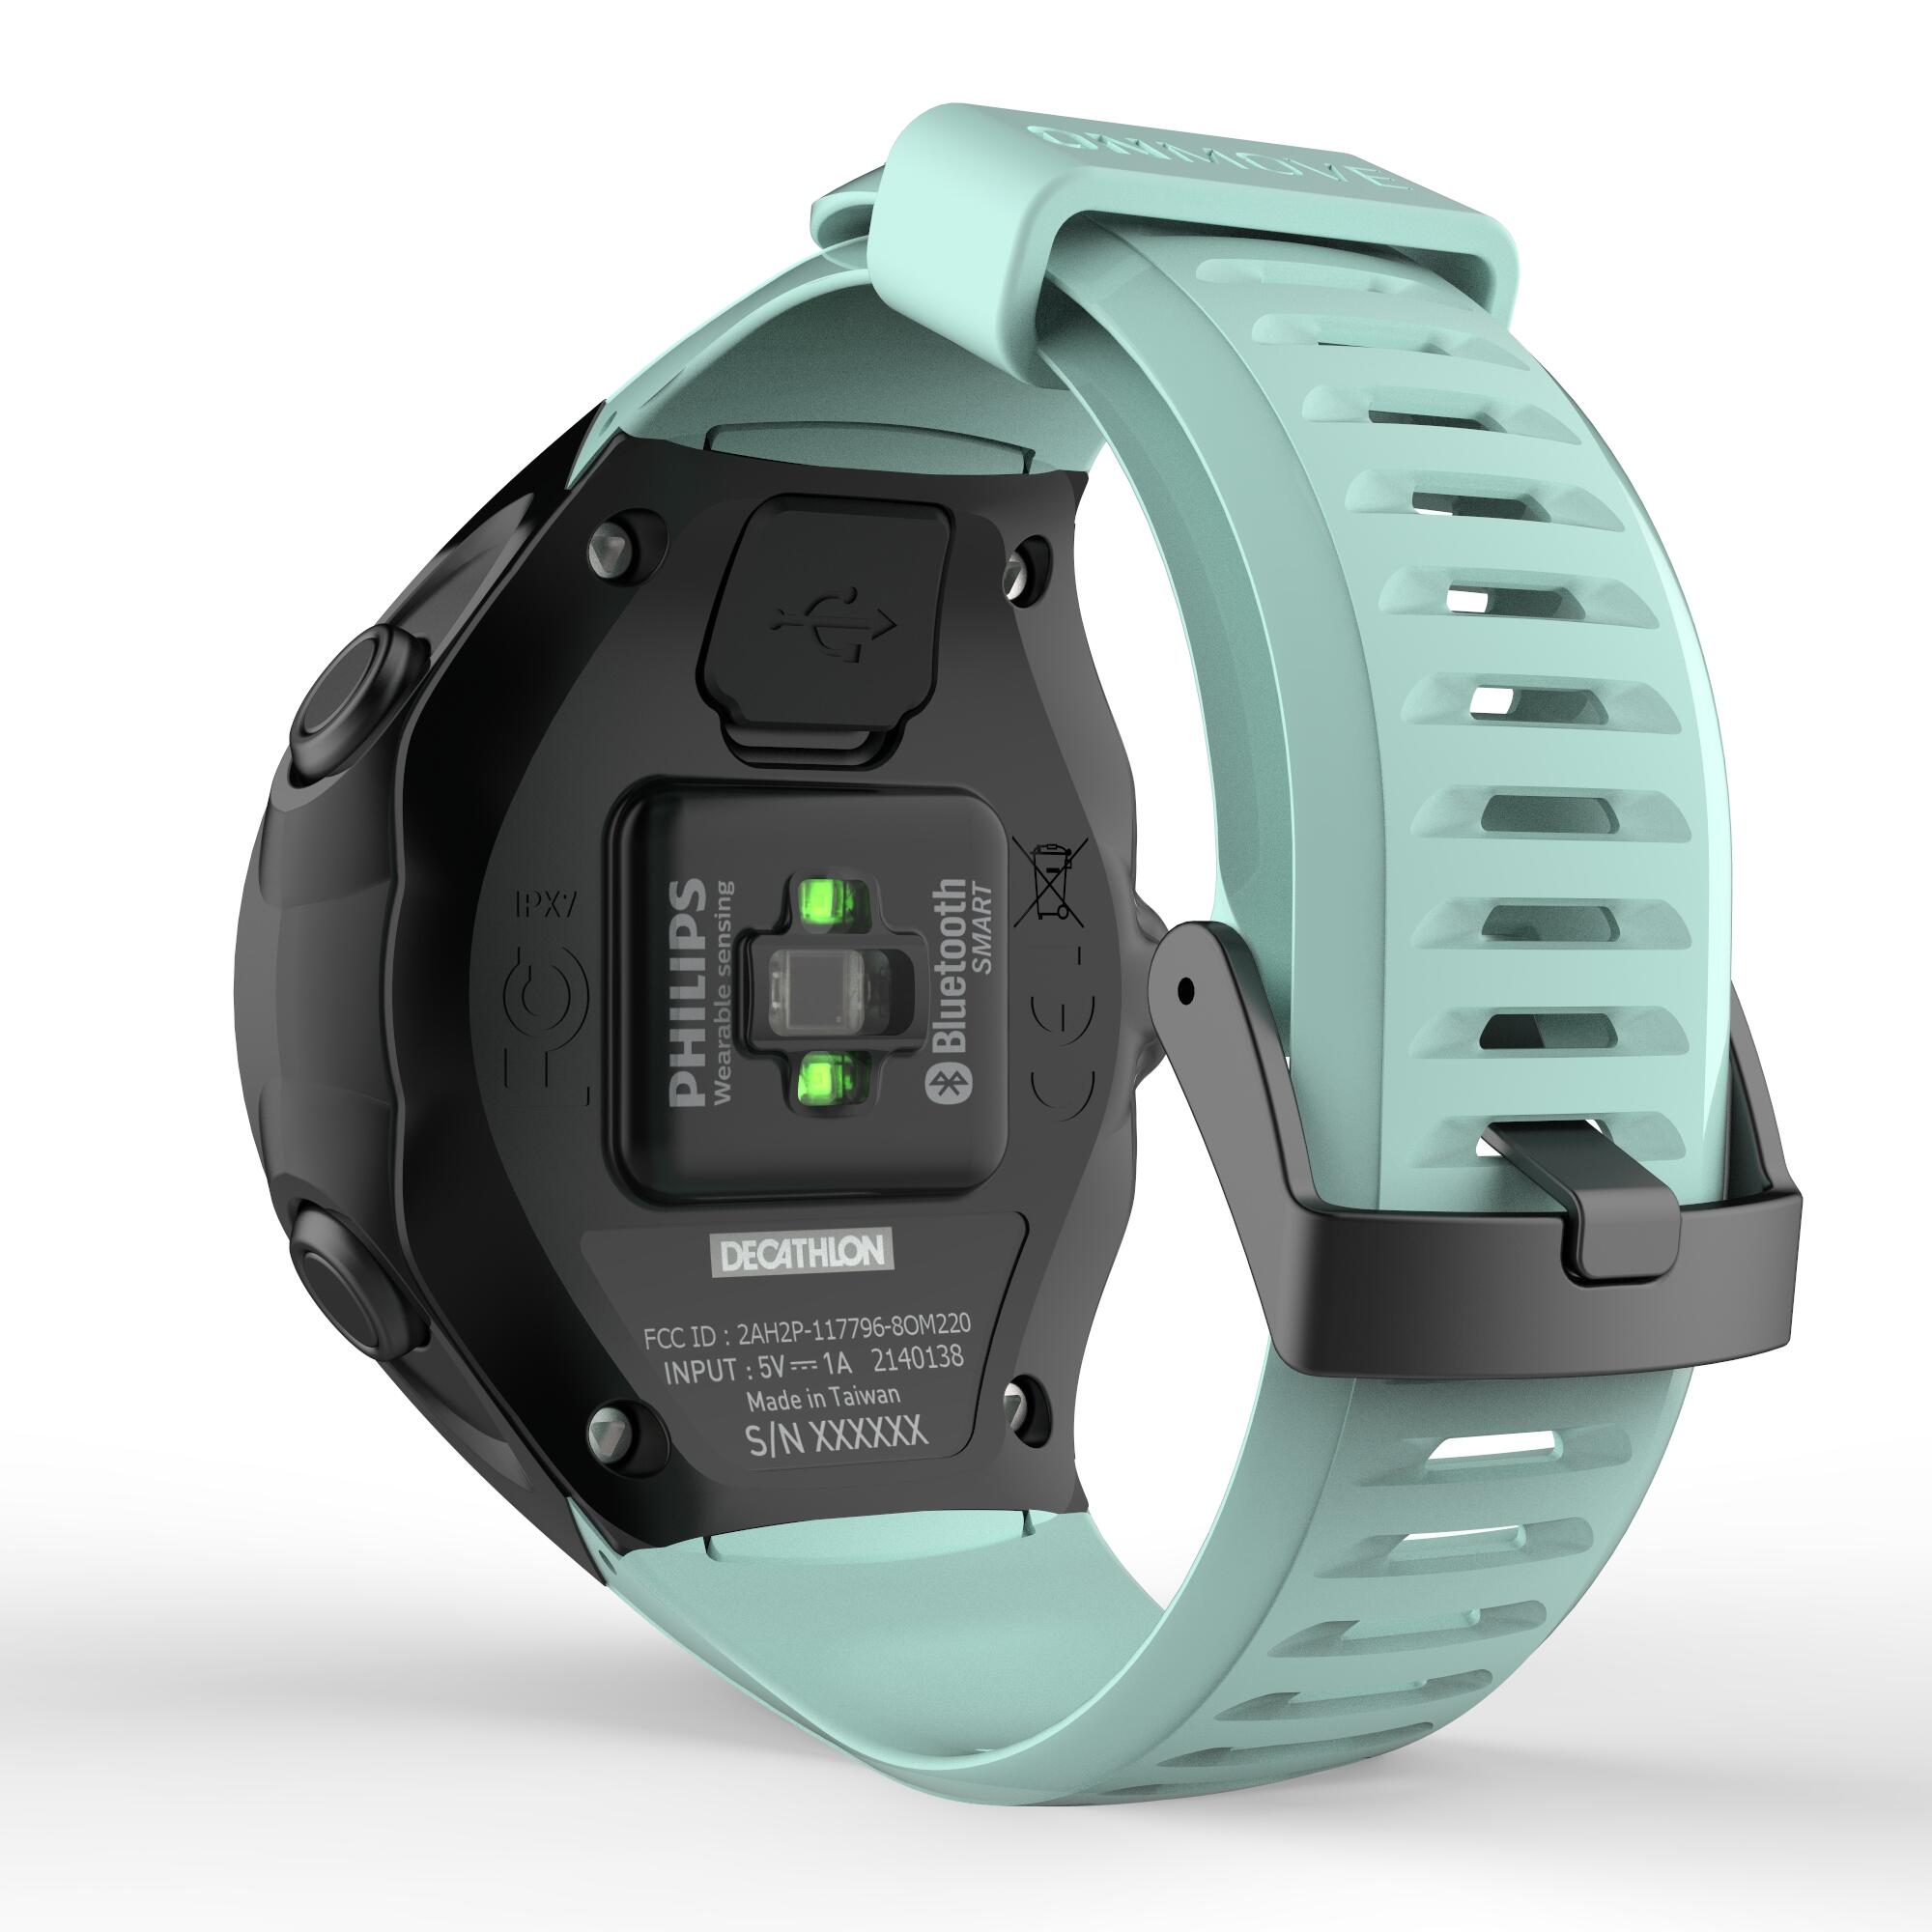 ONmove 500 GPS running watch and wrist heart rate monitor - sea green 2/17